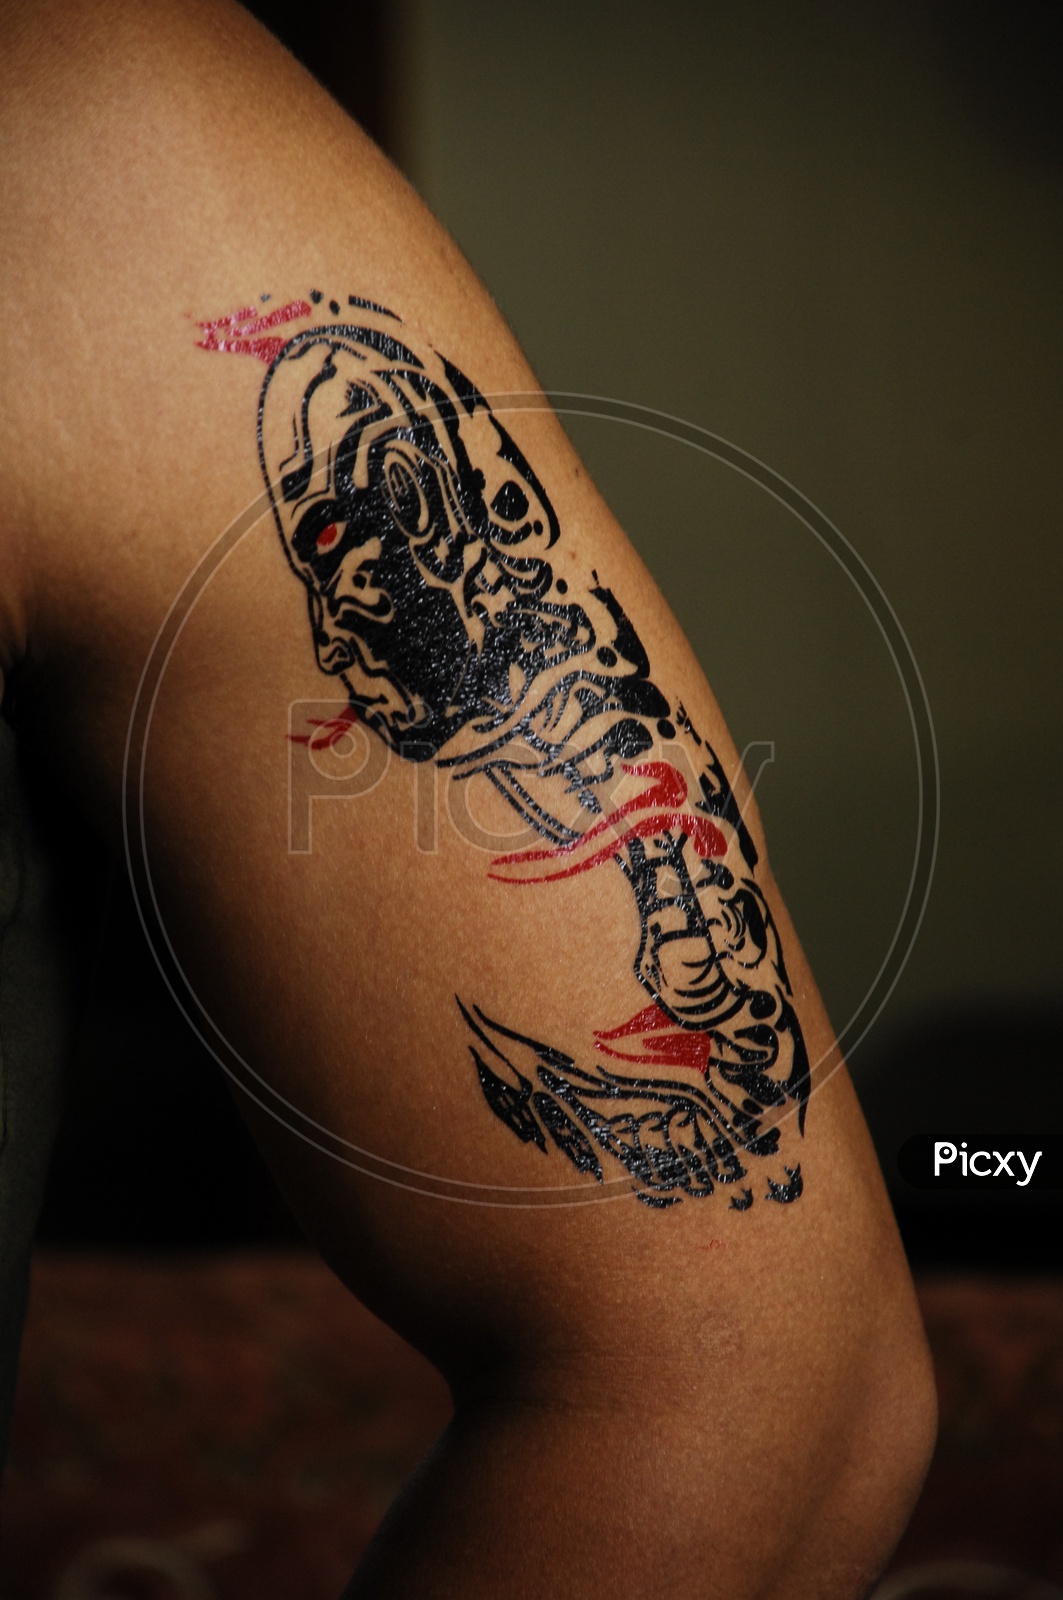 Tattoo on an arm